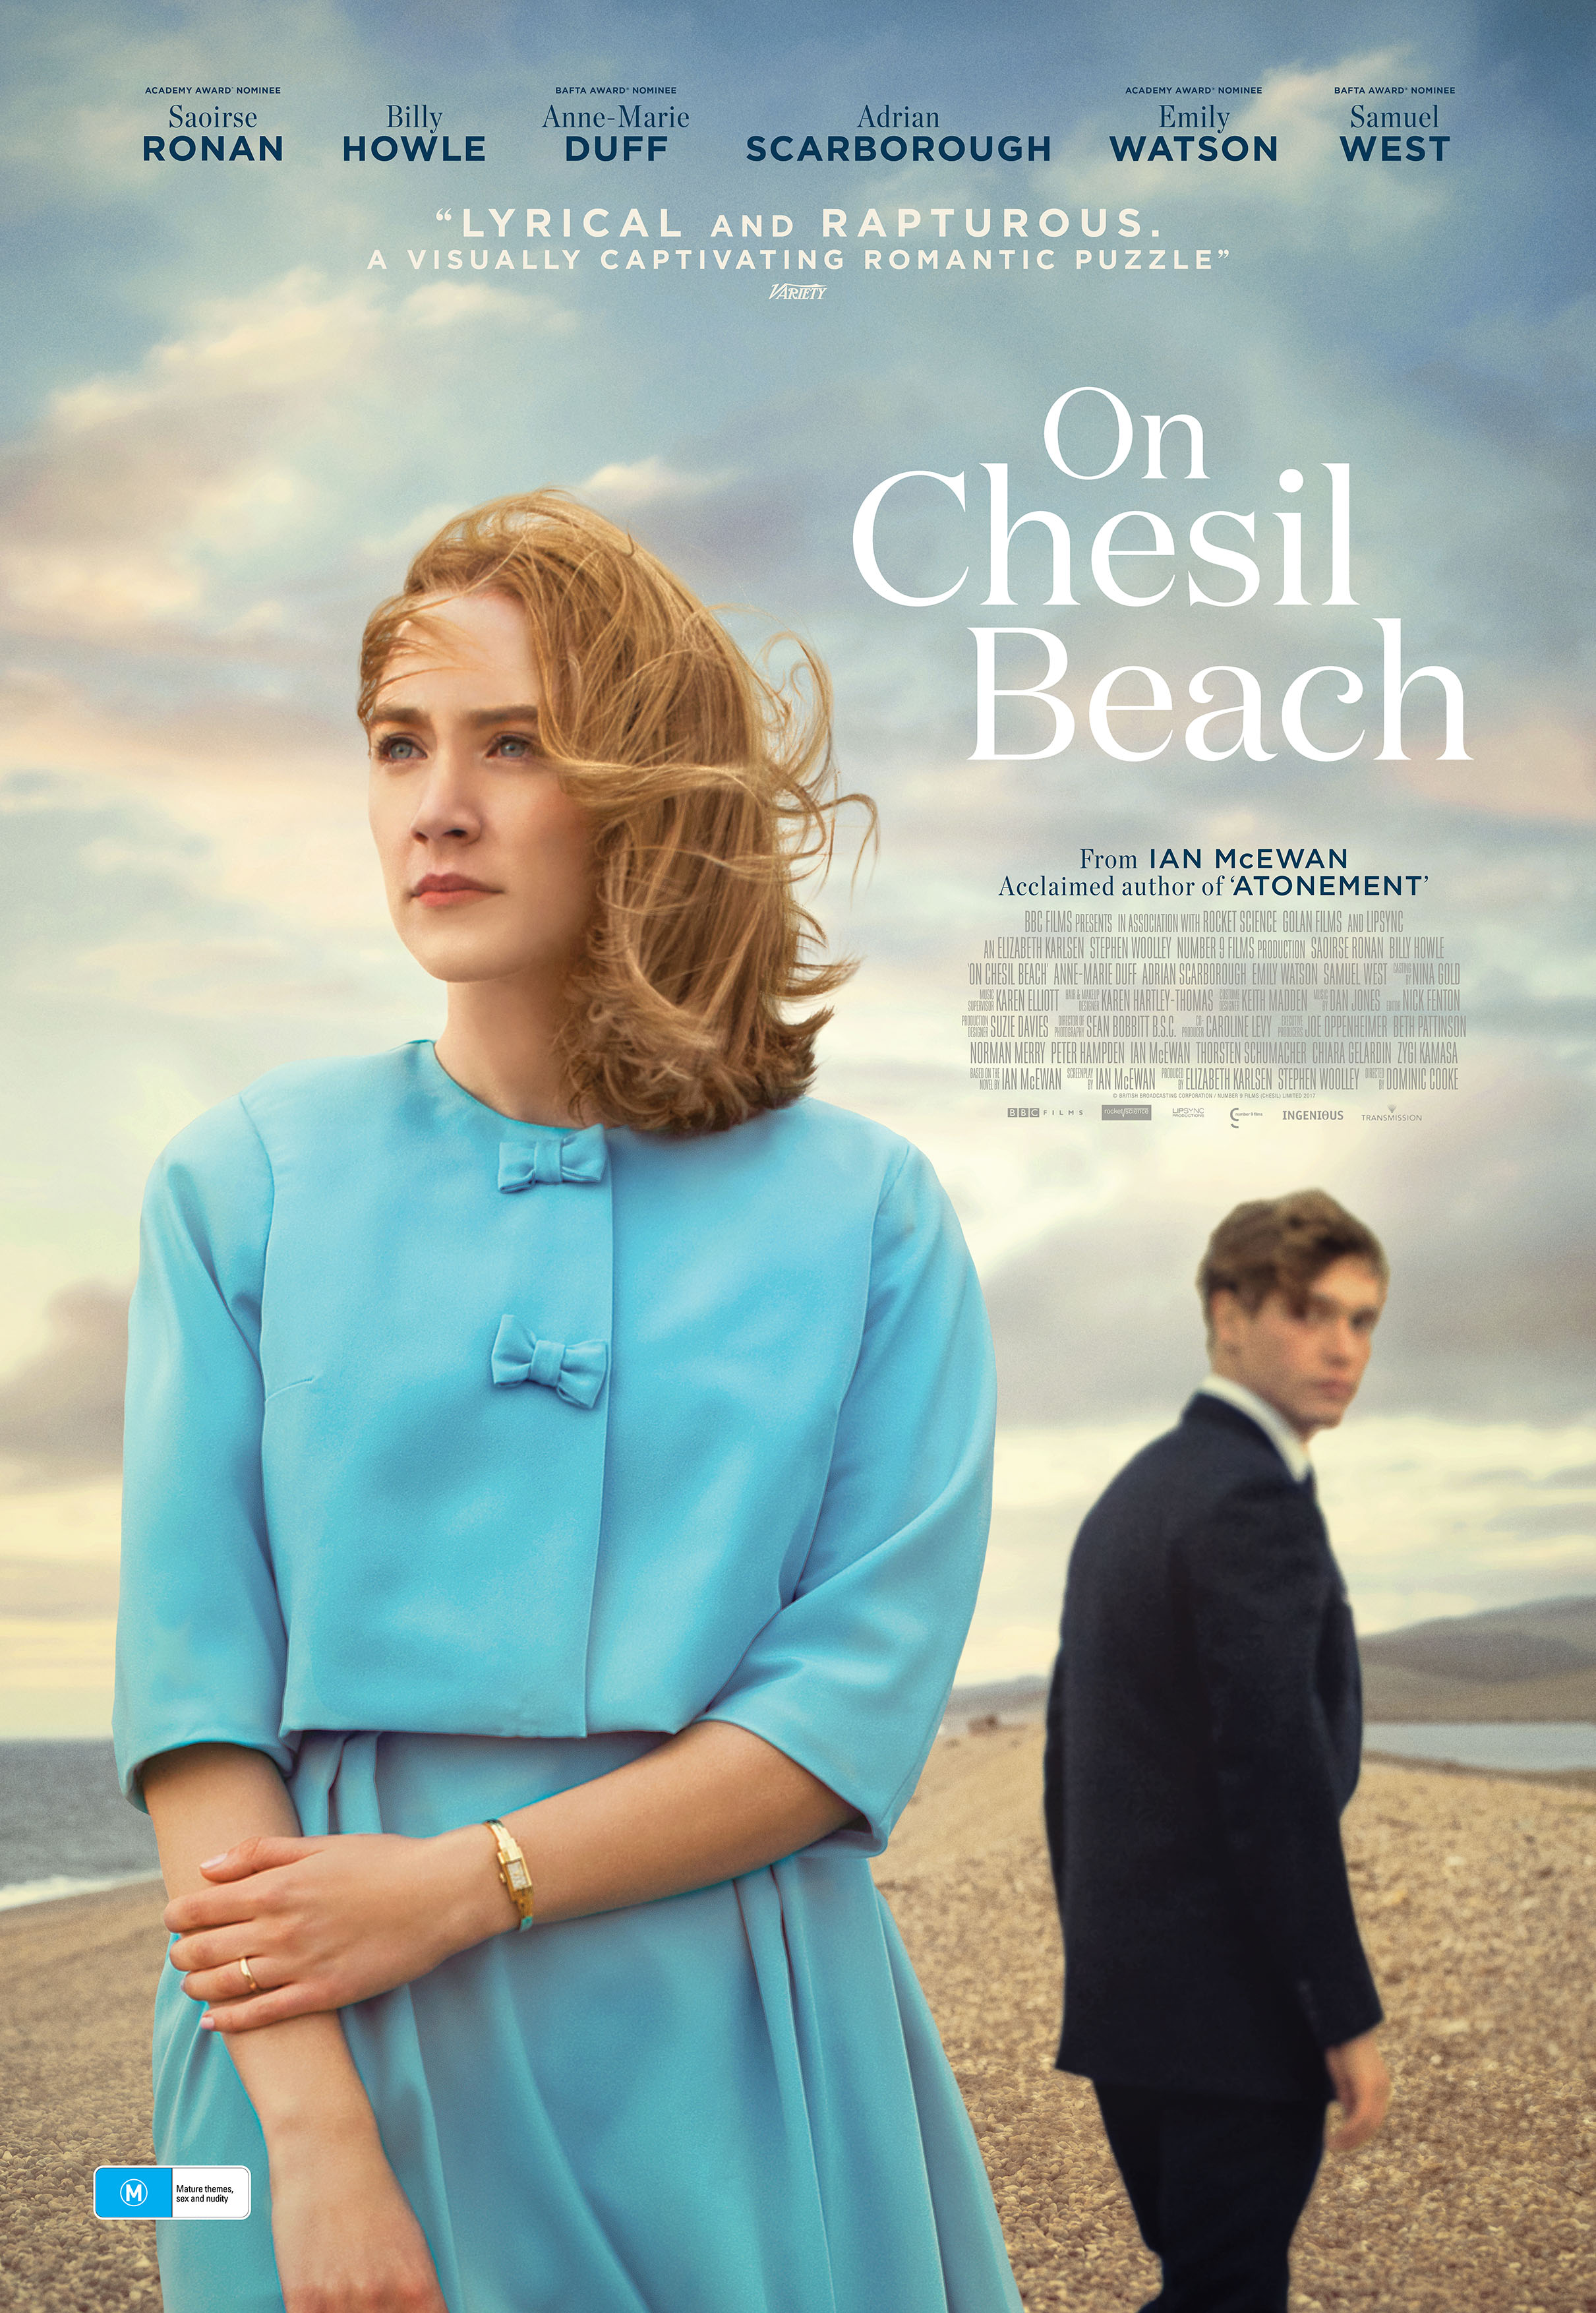 Film Review – On Chesil Beach – Jason Jabba Davis